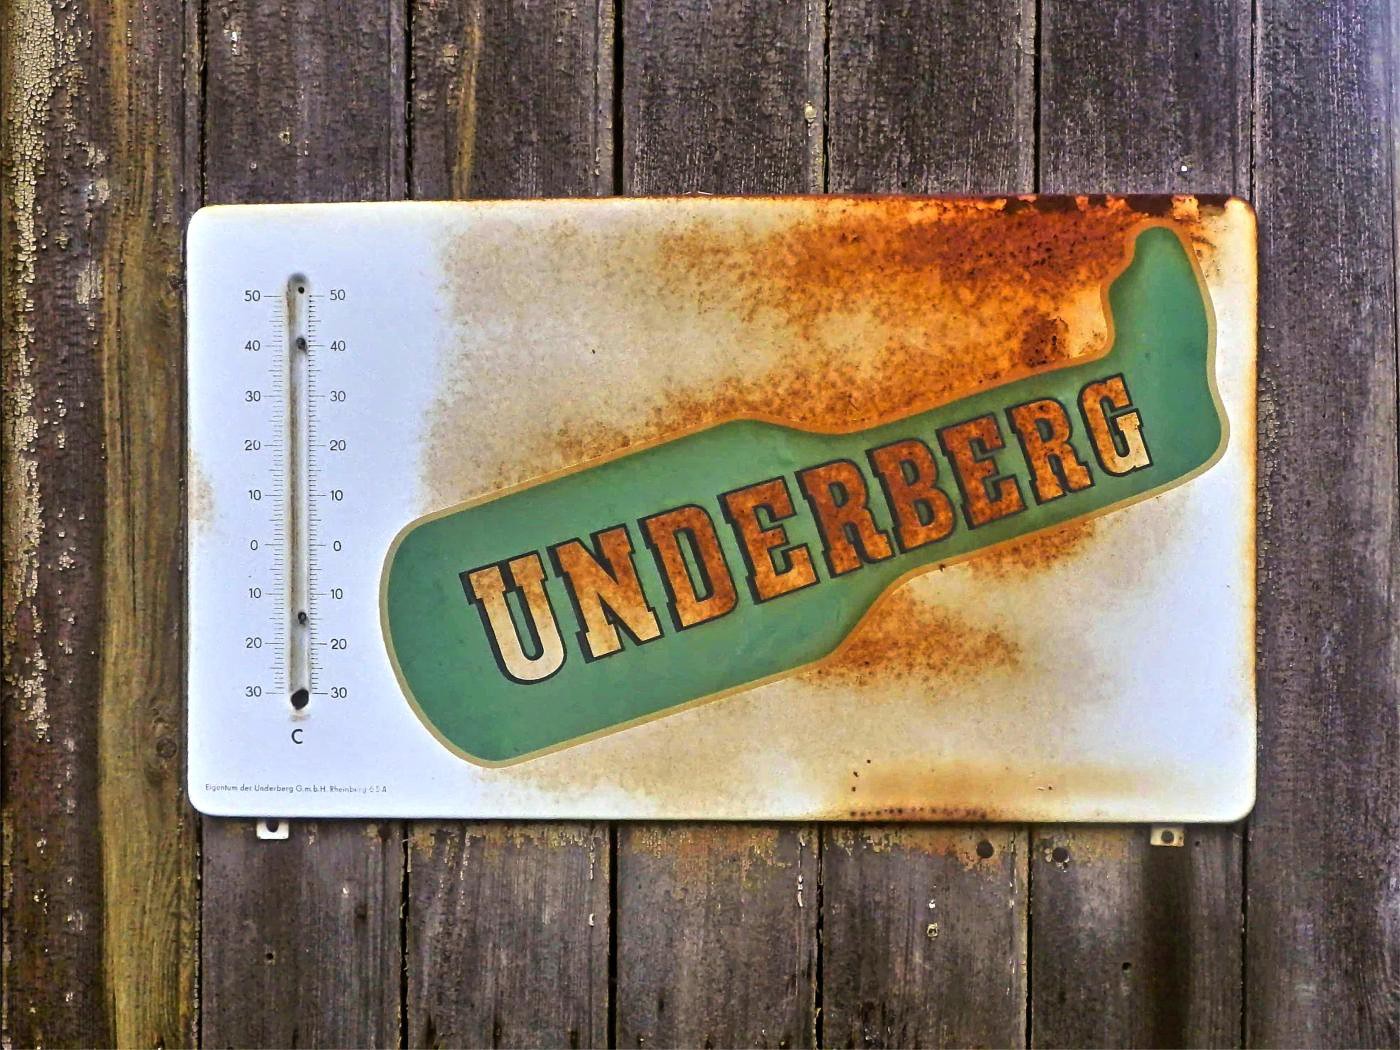 Underberg